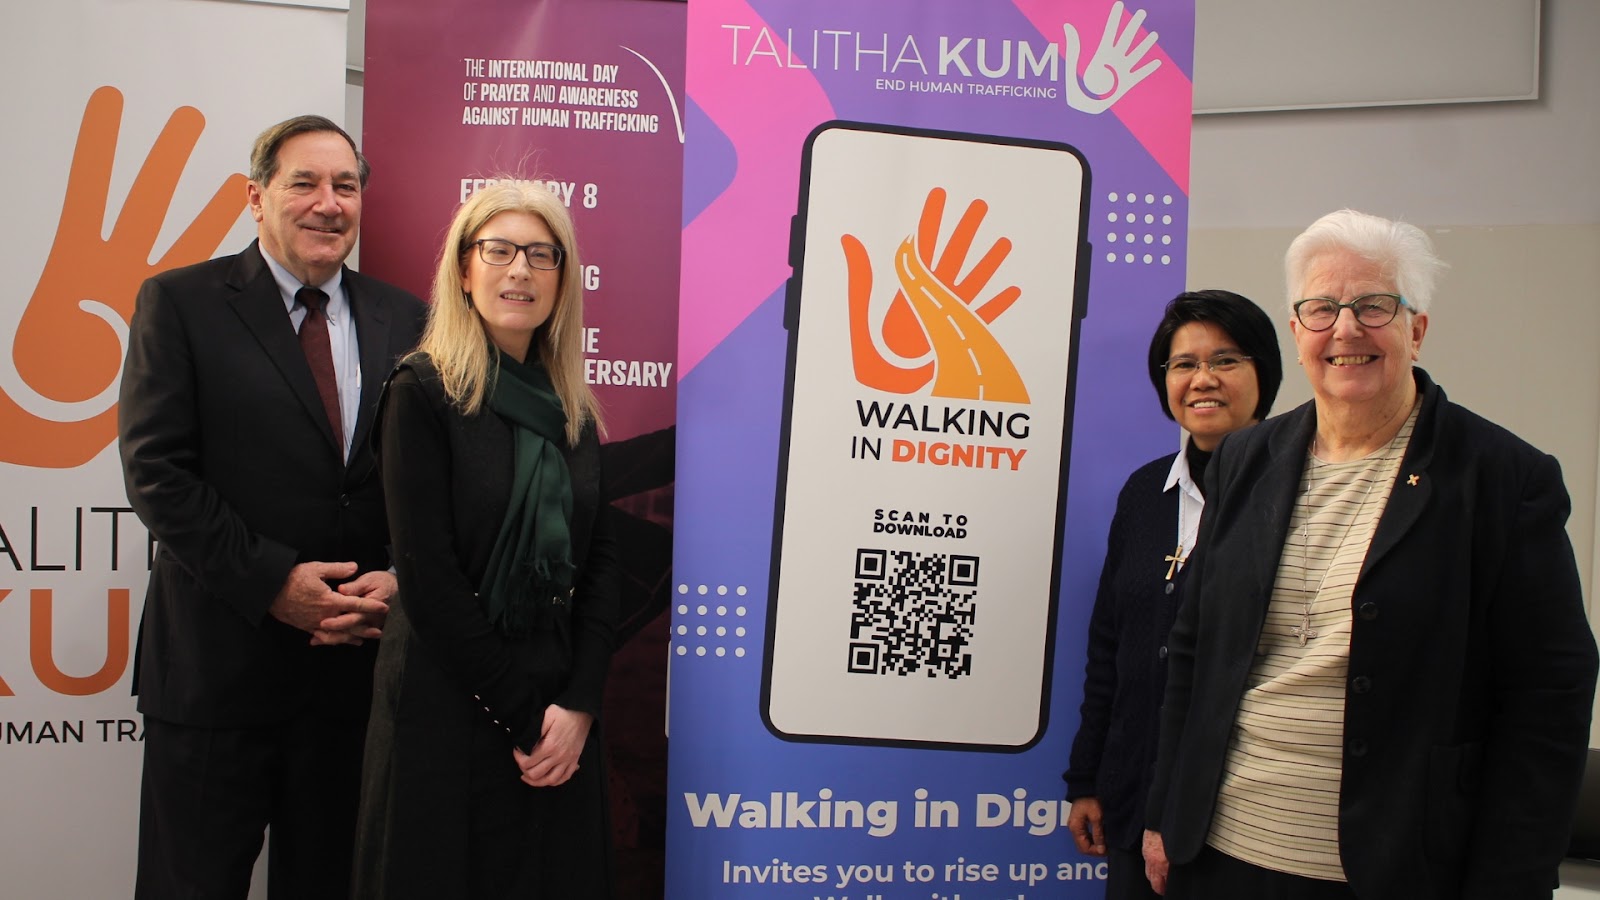 Talitha Kum ra mắt ứng dụng "Walking in Dignity"